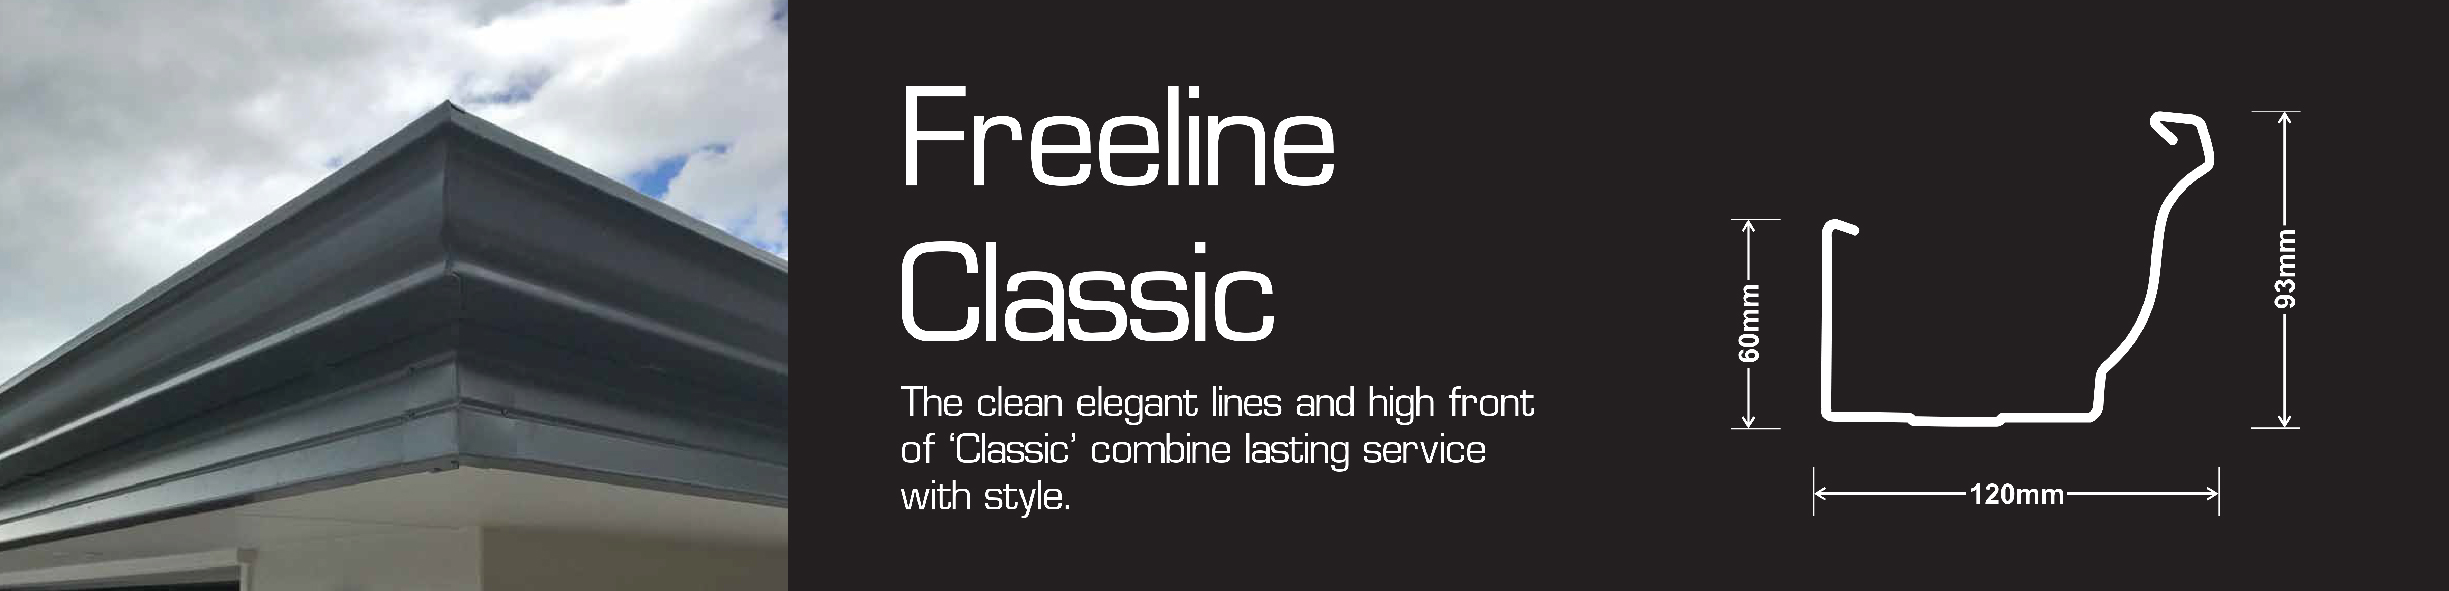 Freeline-Classic.jpg